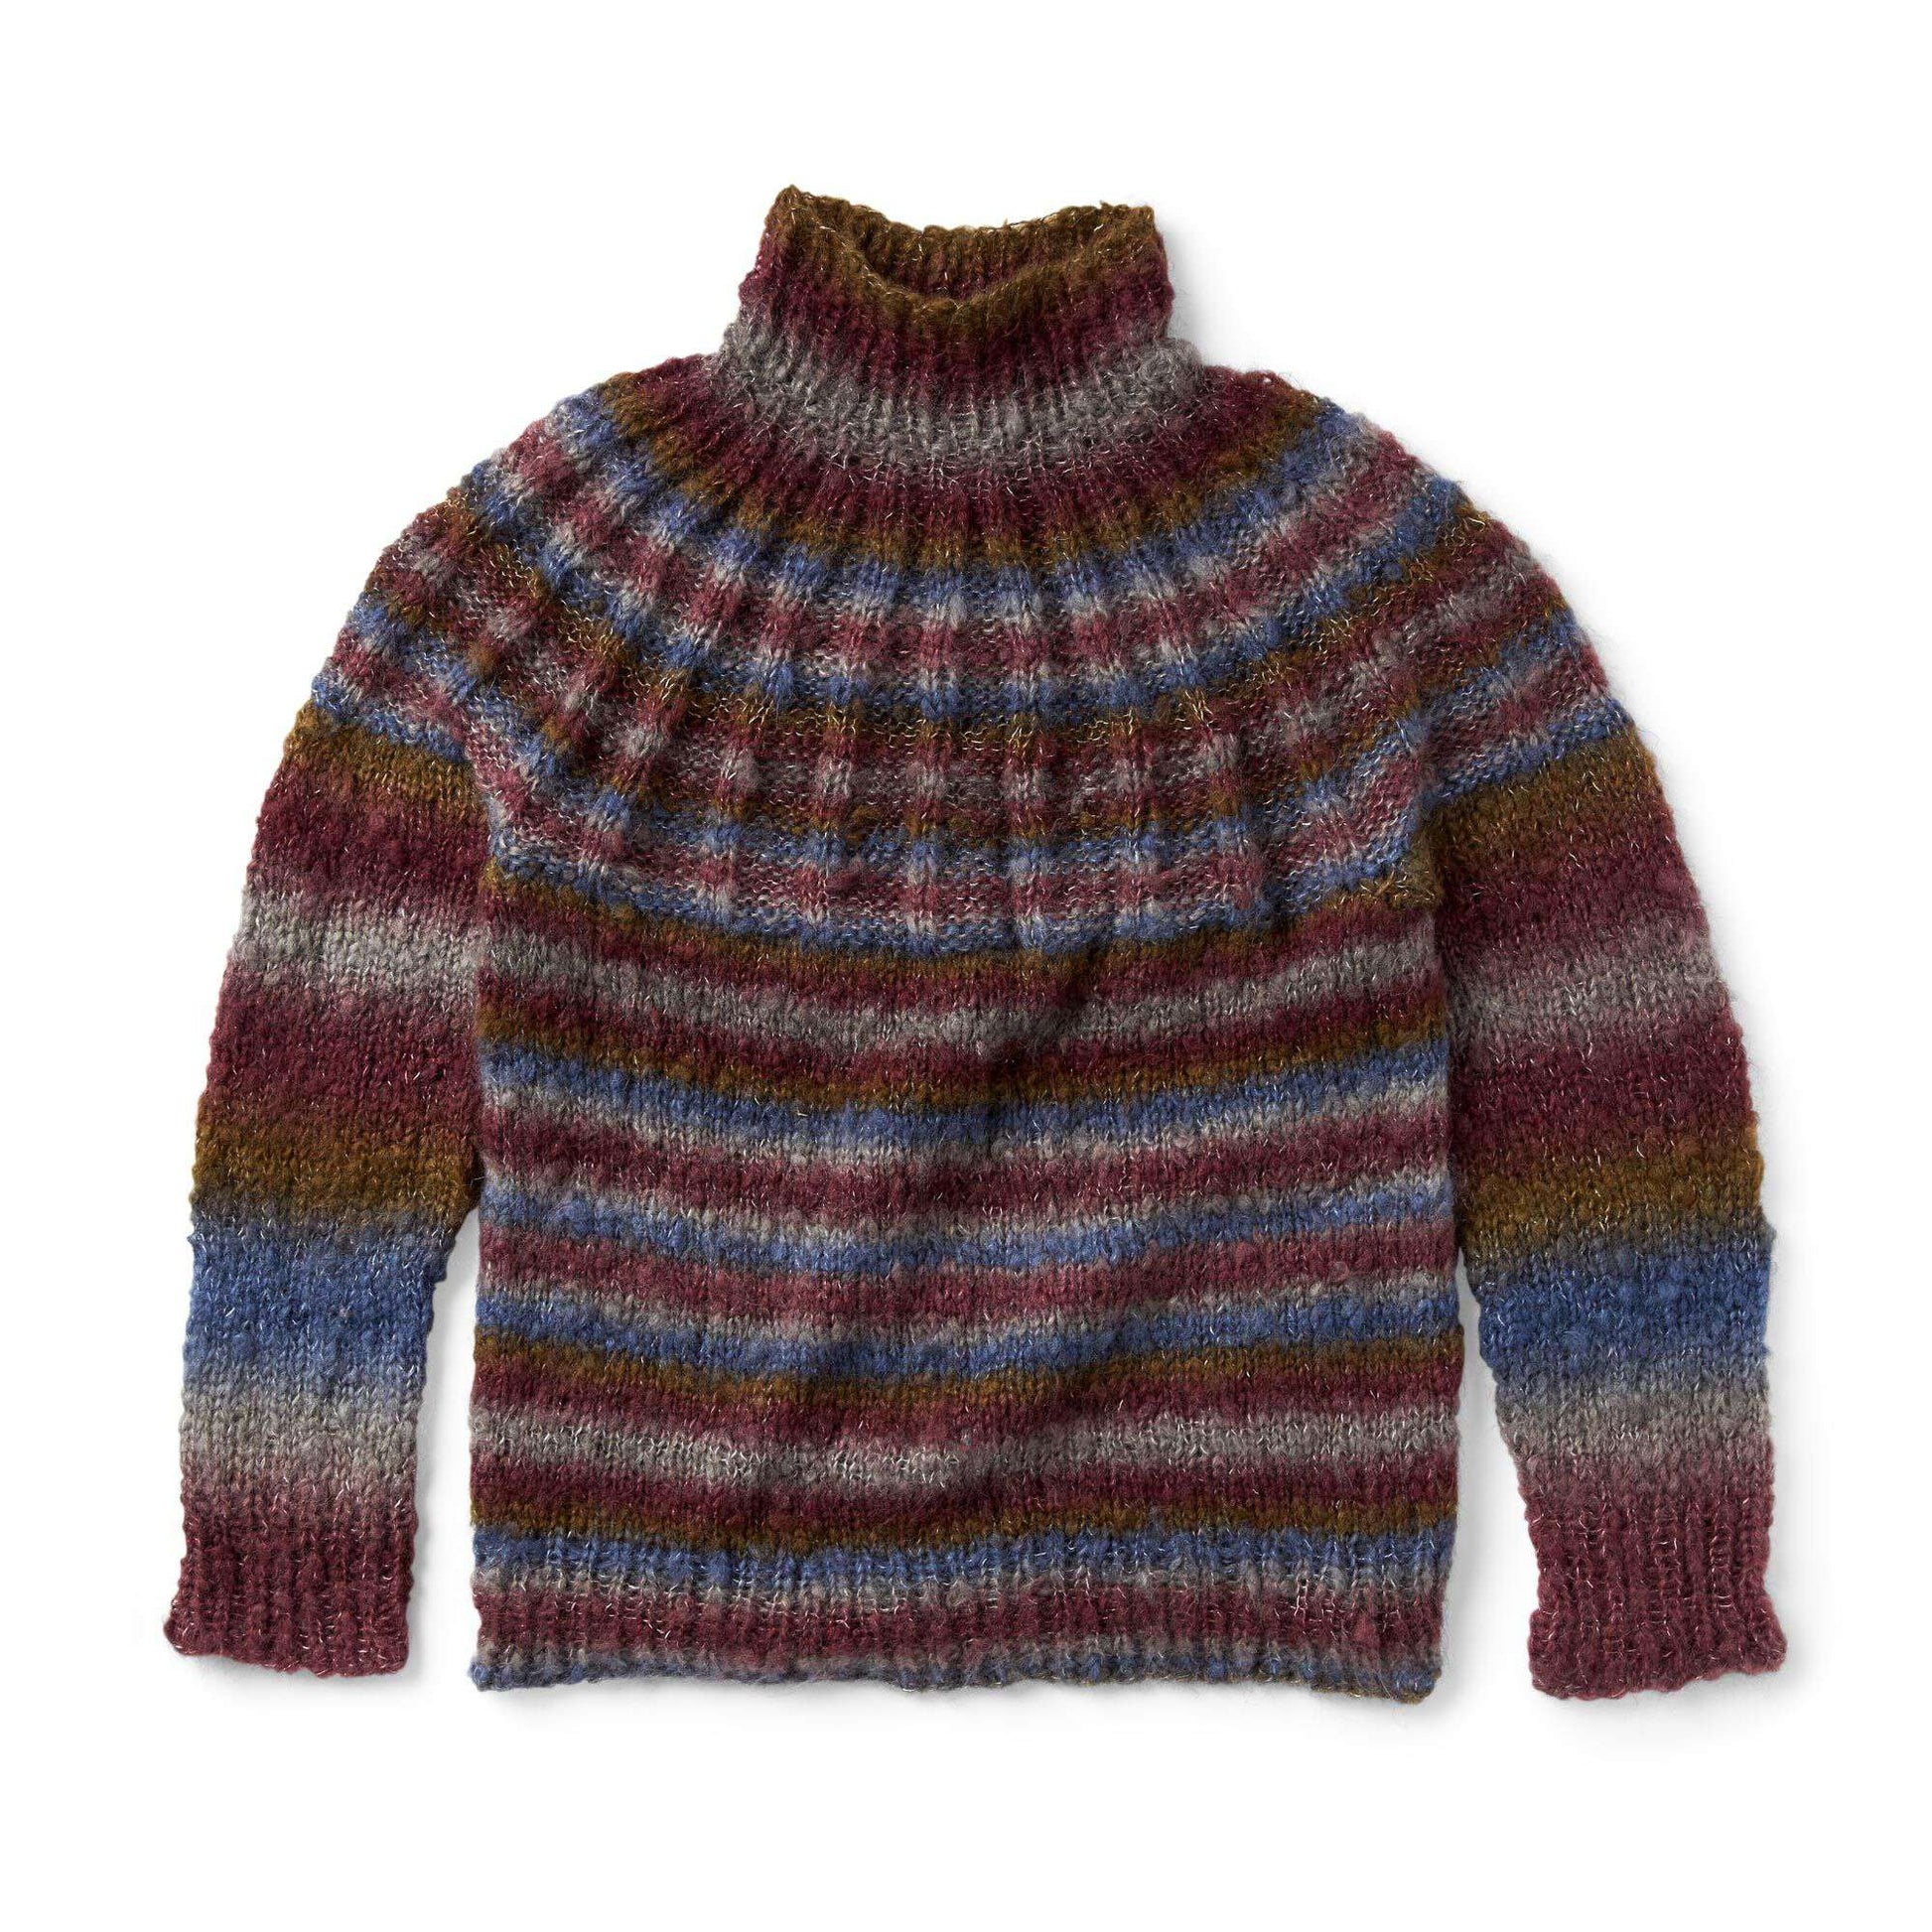 Free Bernat Ribbed Top Down Knit Sweater Pattern